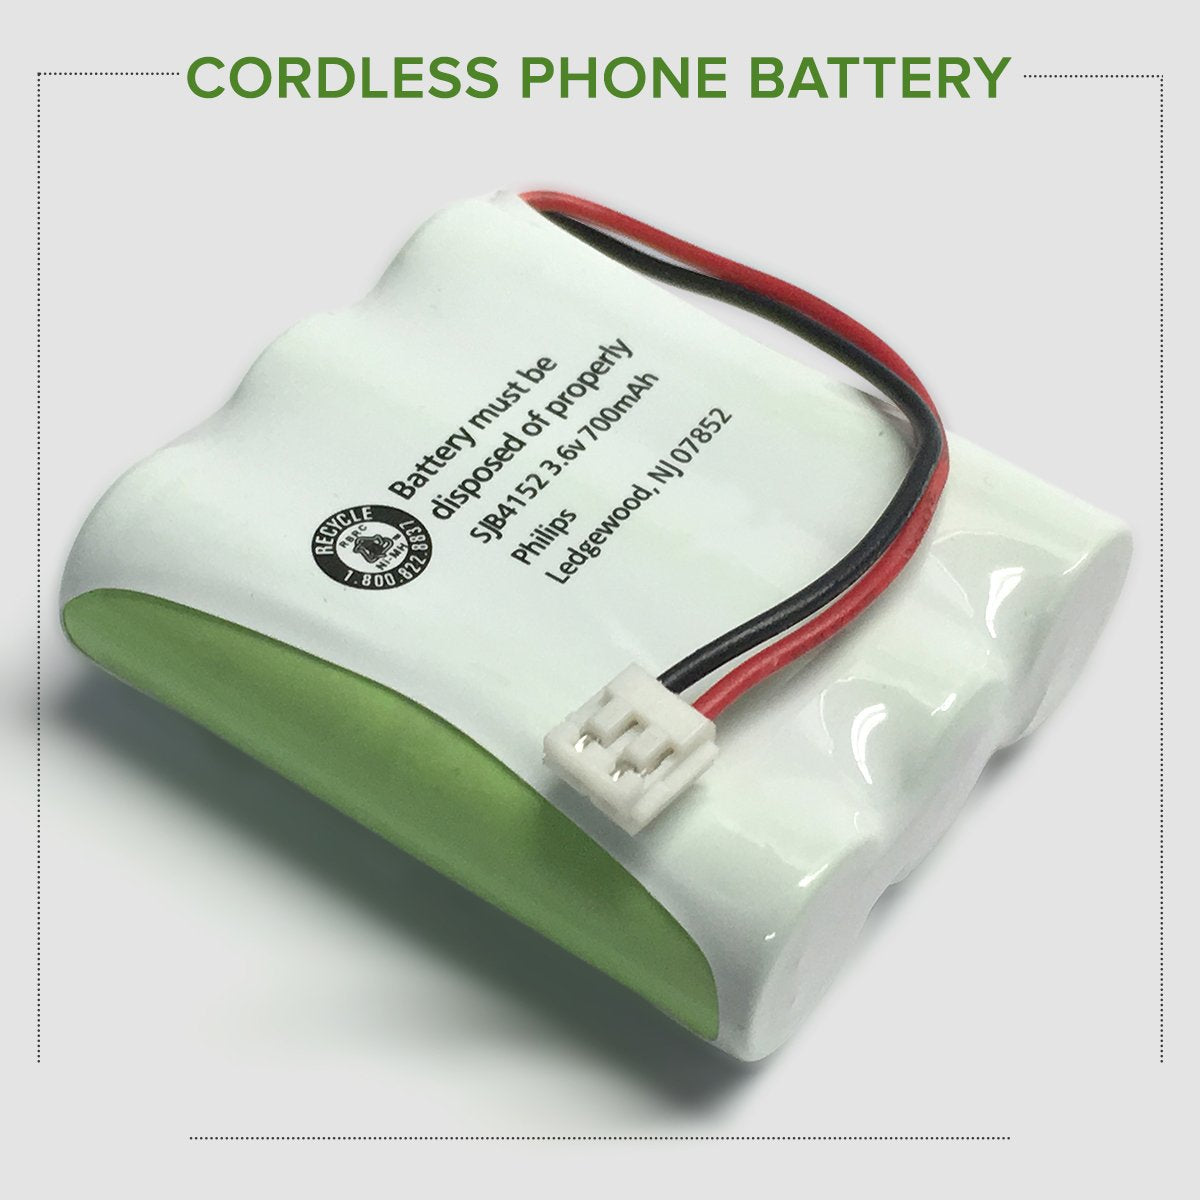 GE 5-2459 Cordless Phone Battery